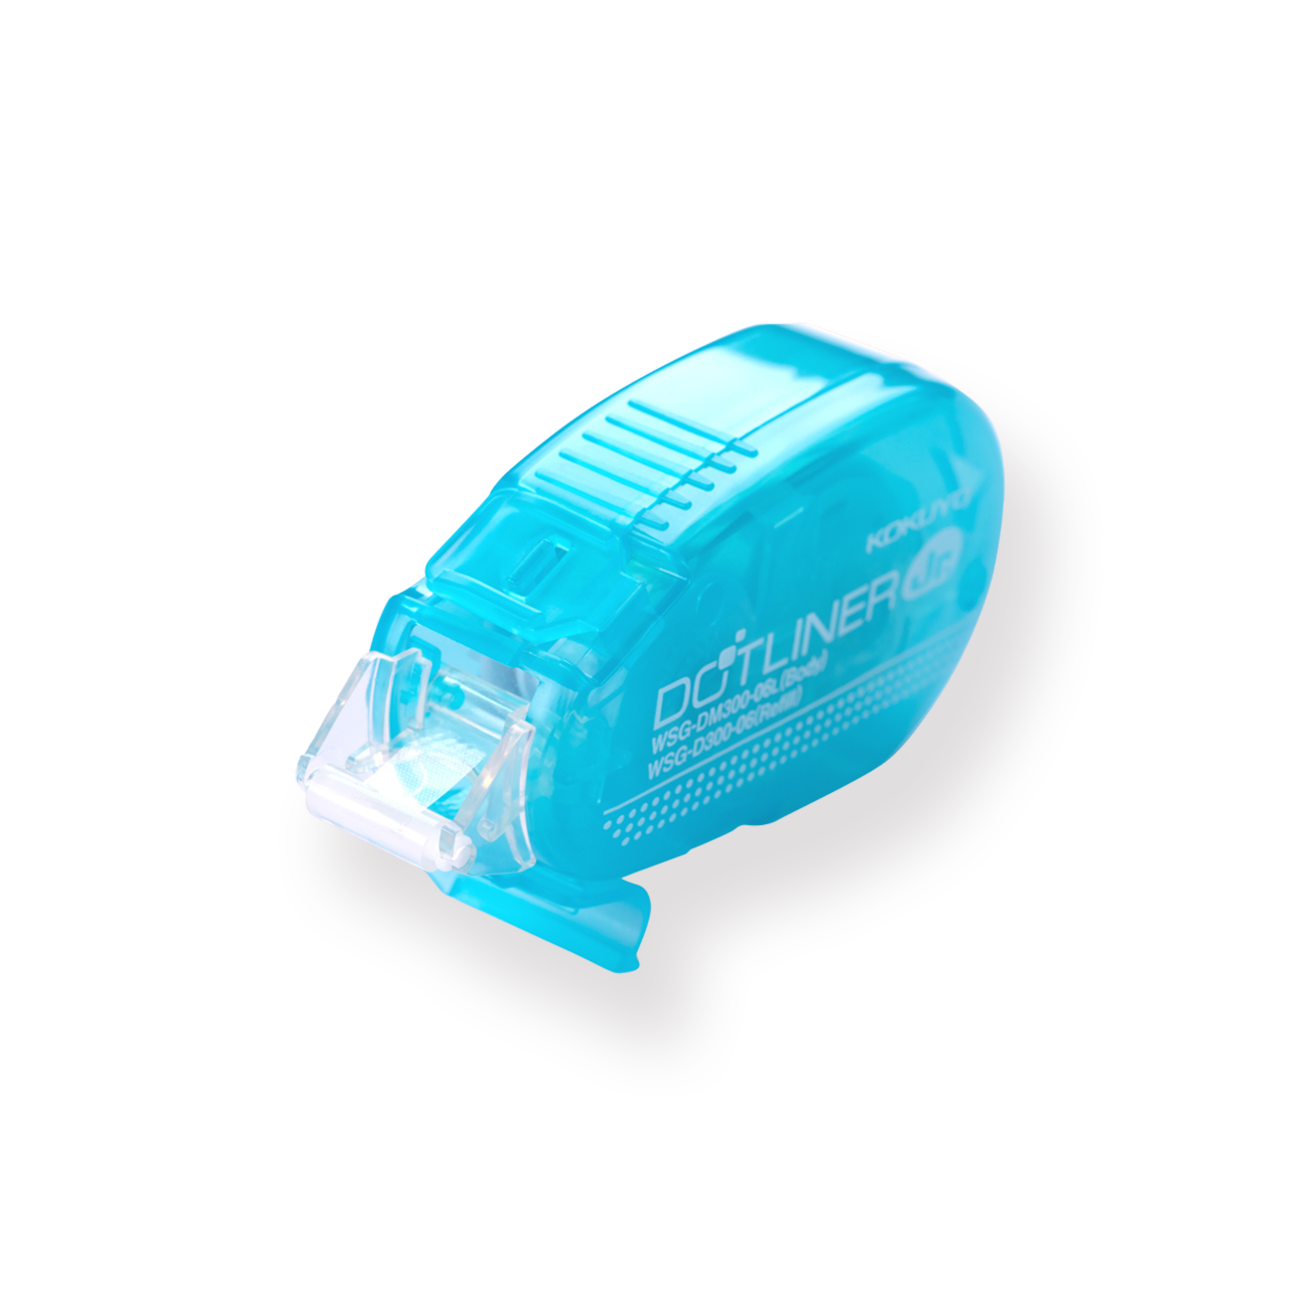 Kokuyo Dotliner Adhesive Glue Tape Roller - Sky Blue